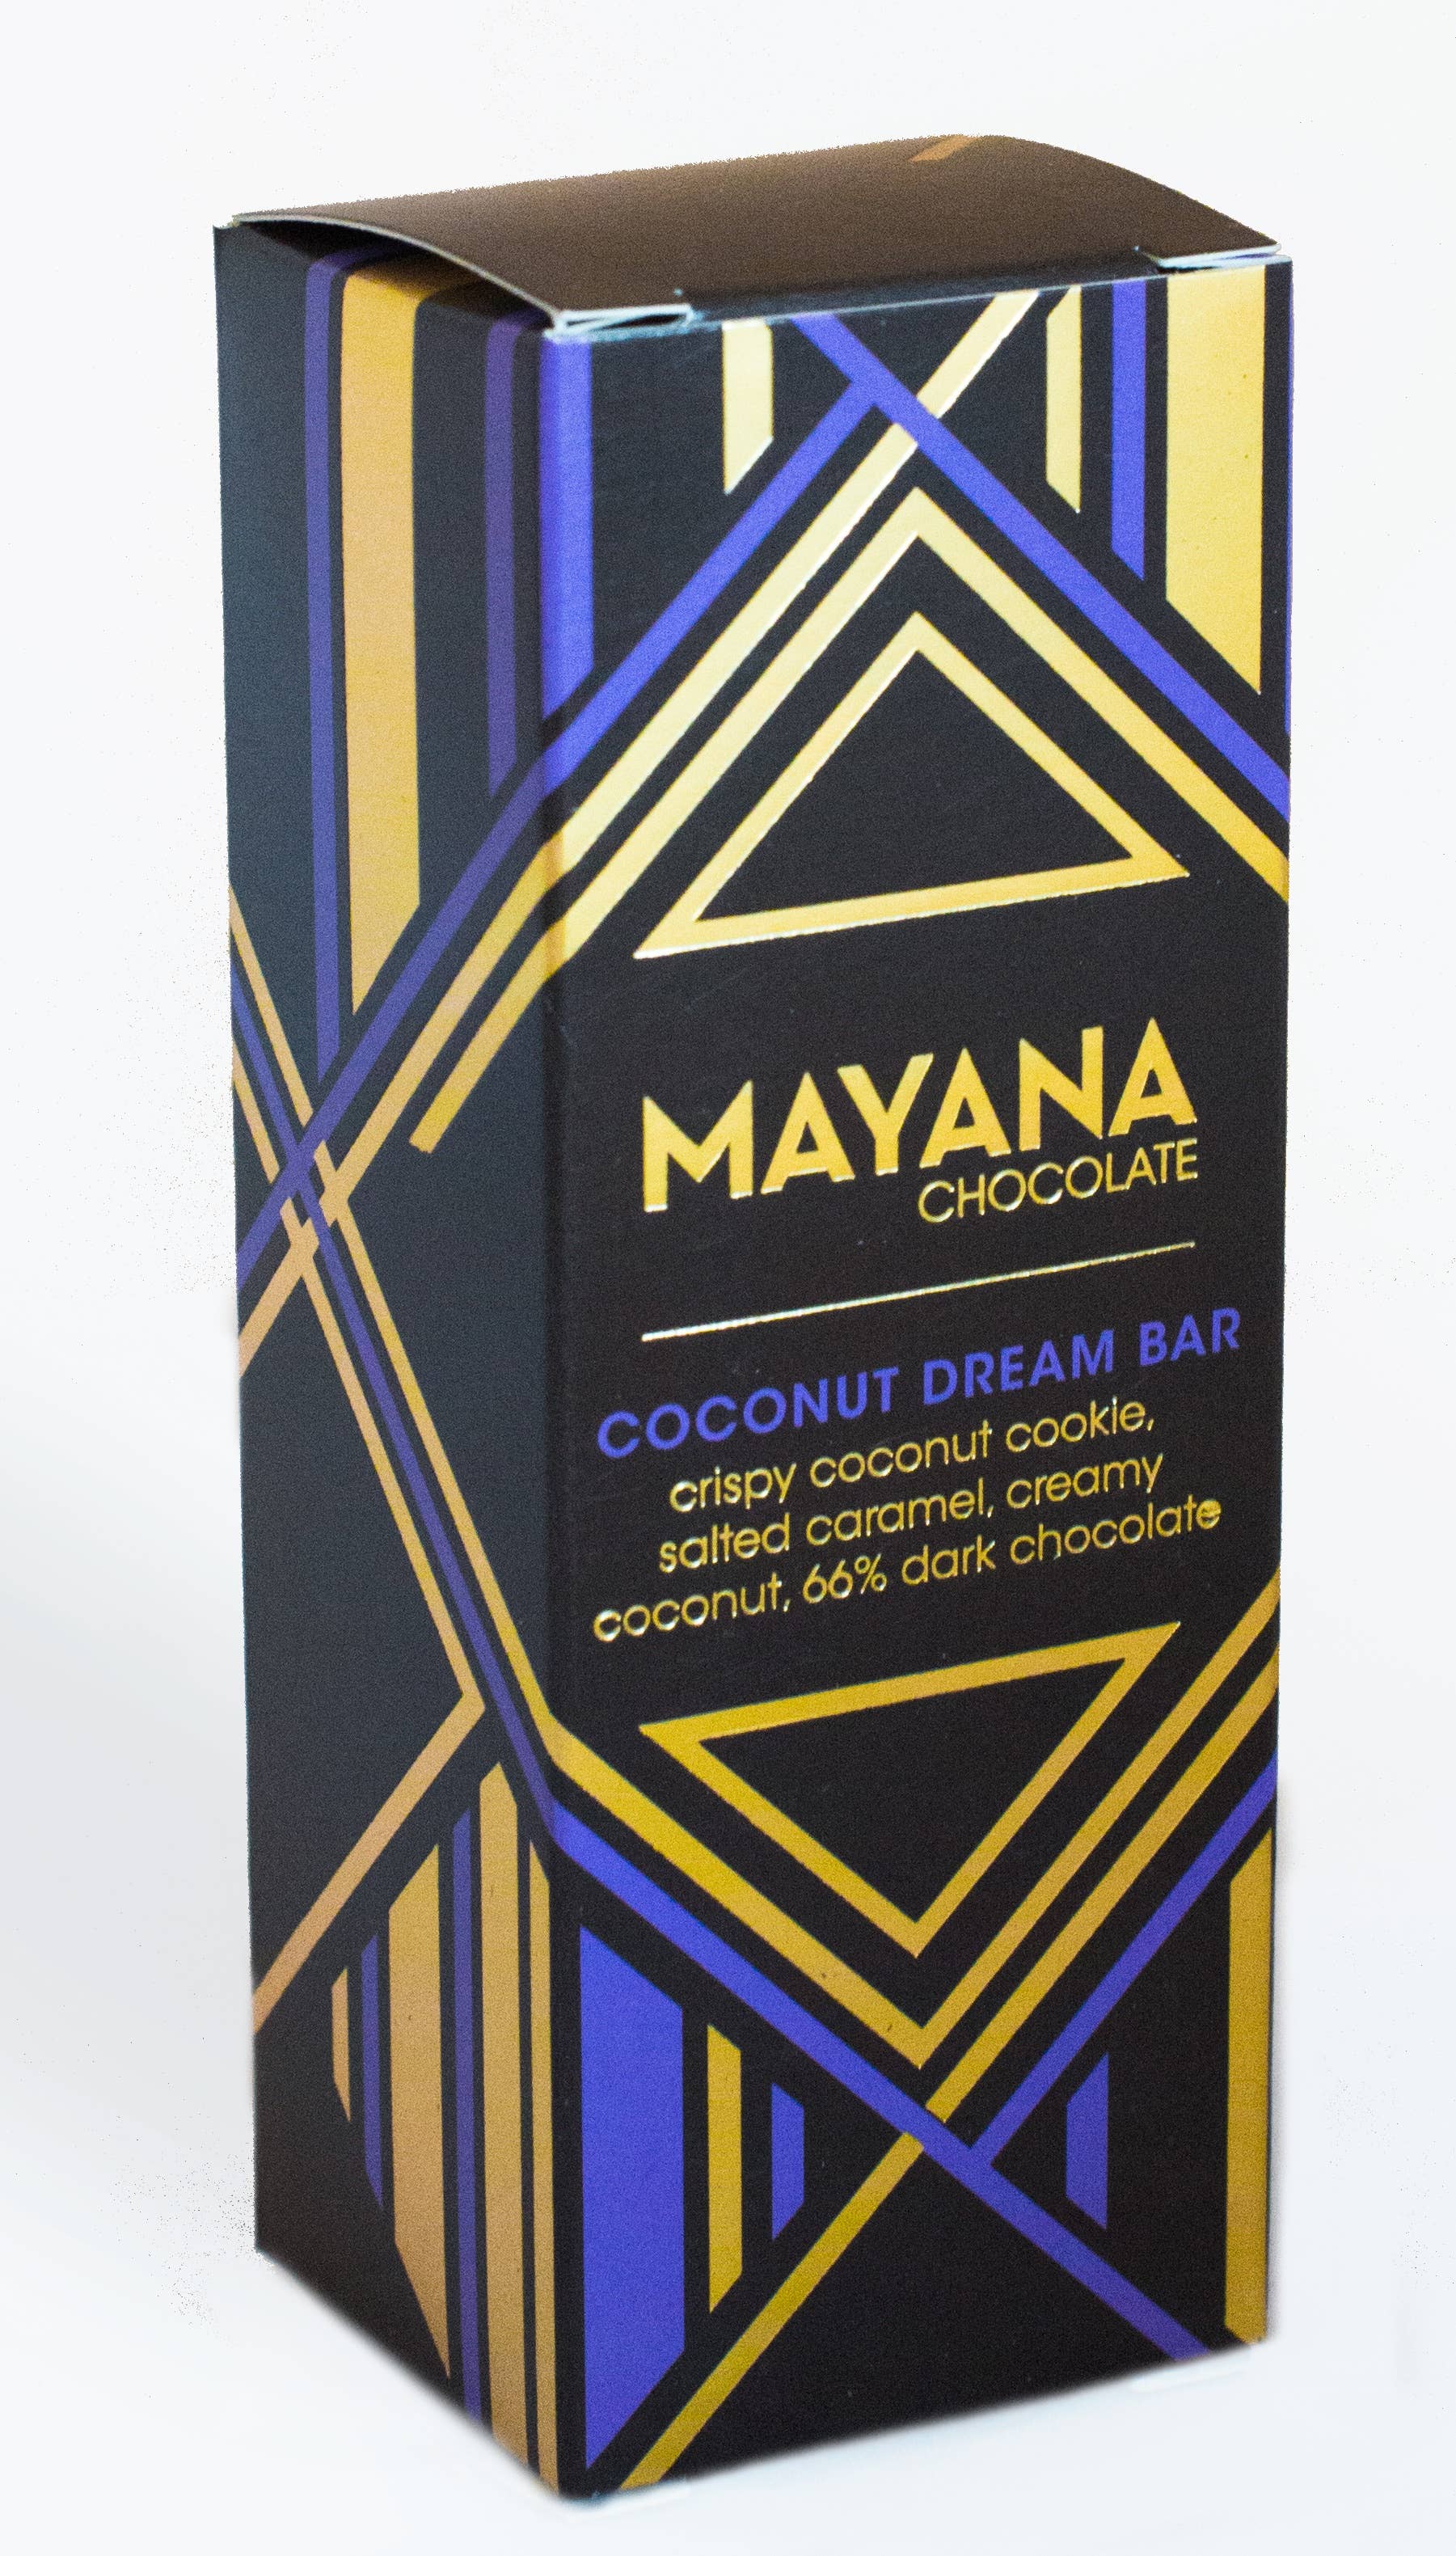 Coconut Dream Bar by Mayana Chocolate